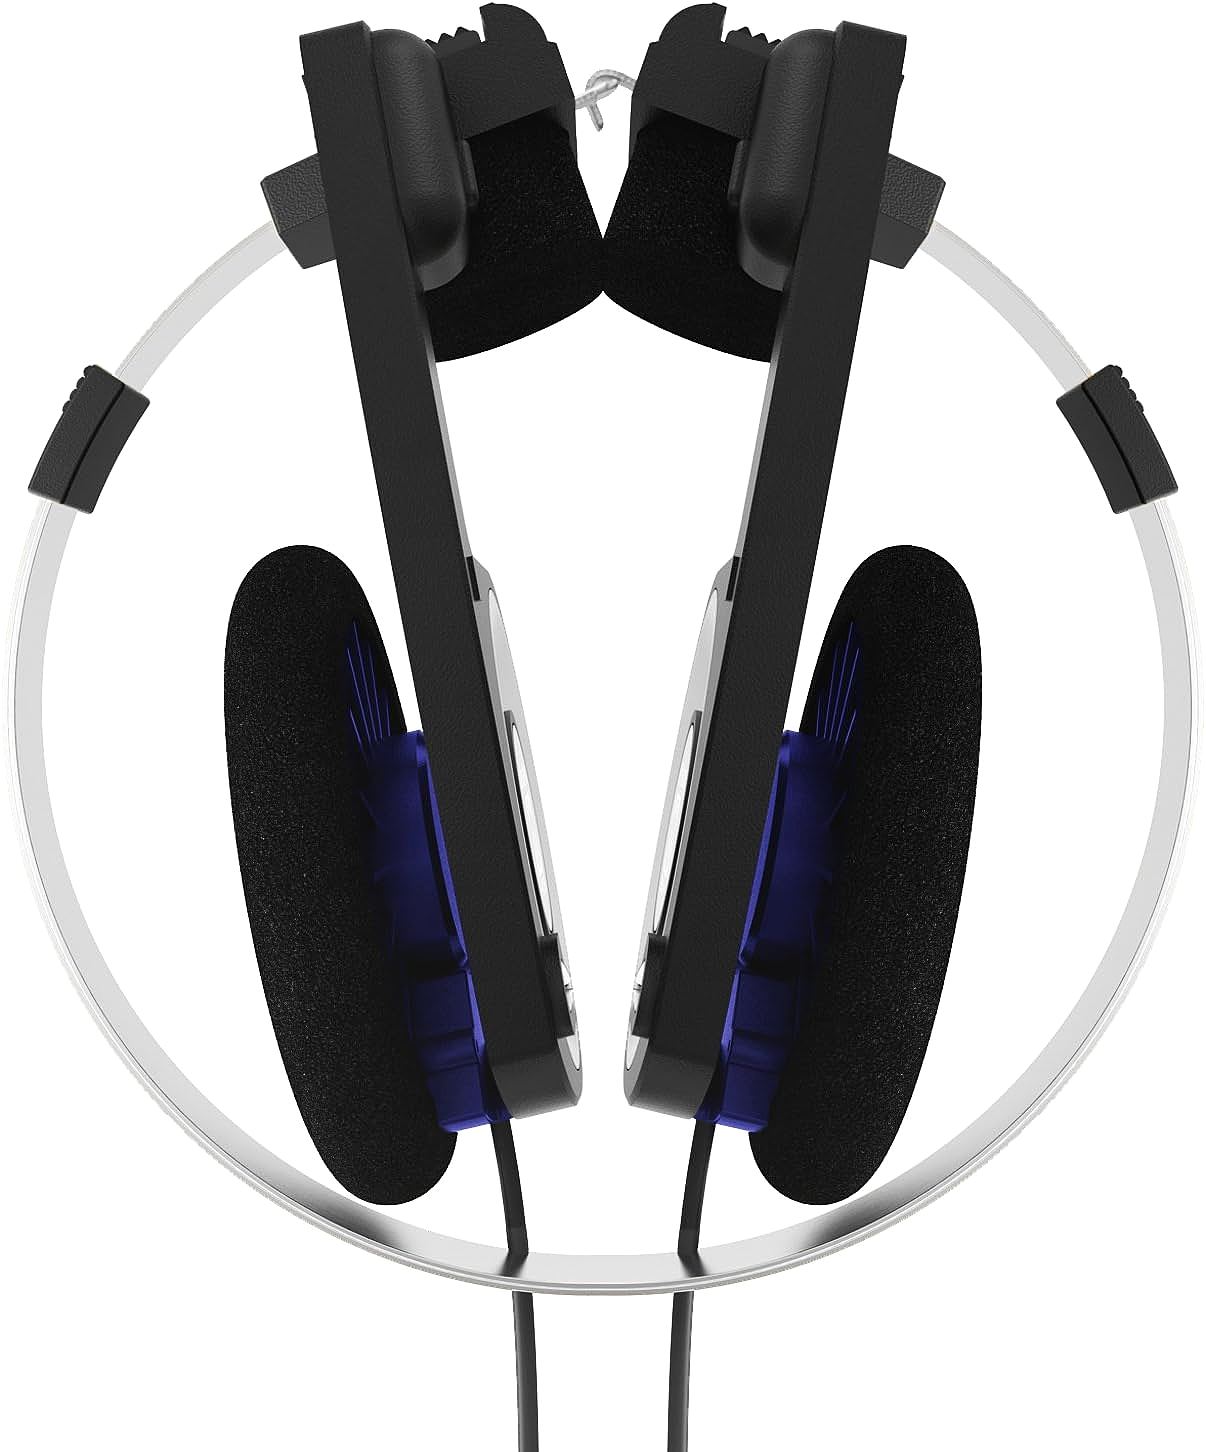  Koss Porta Pro Wireless On-Ear Headphones 